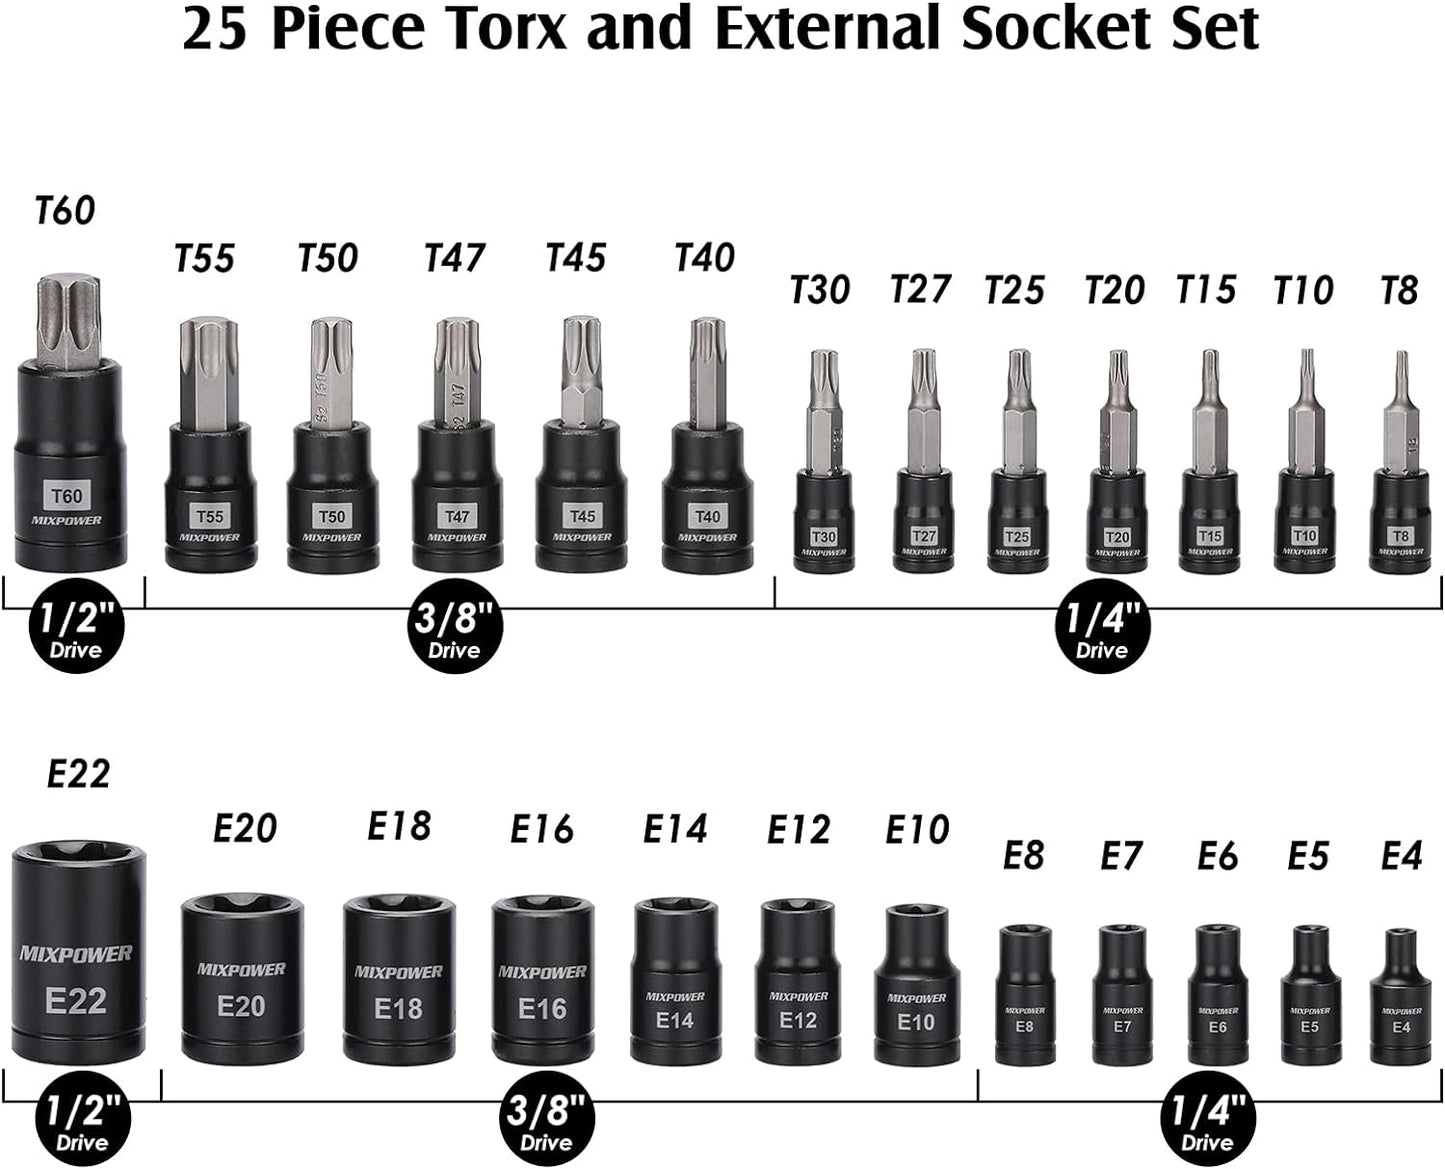 25 Piece Torx Bit and Socket Set, 13 Star Bits (T8- T60) & 12 E-Torx Sockets (E4-E22), Professional Grade Auto & Motorcycle Mechanic Set